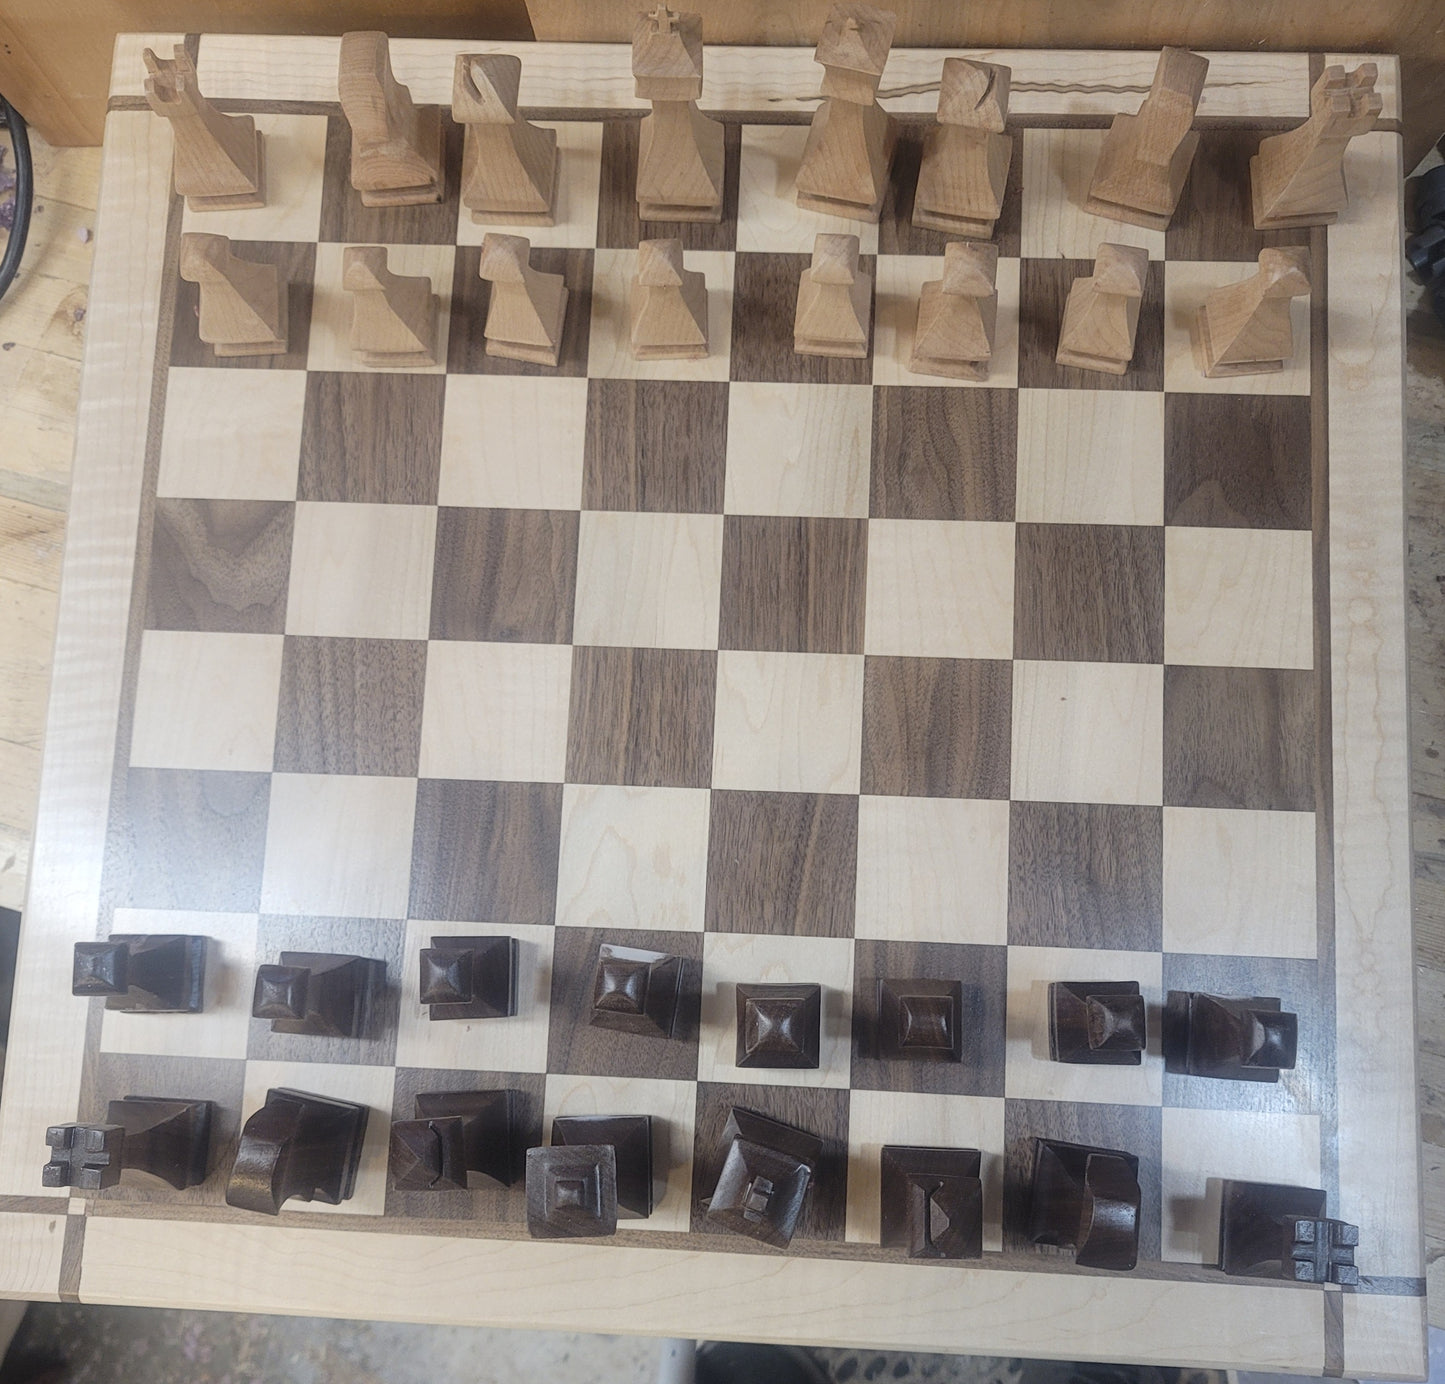 Custom Chess Board